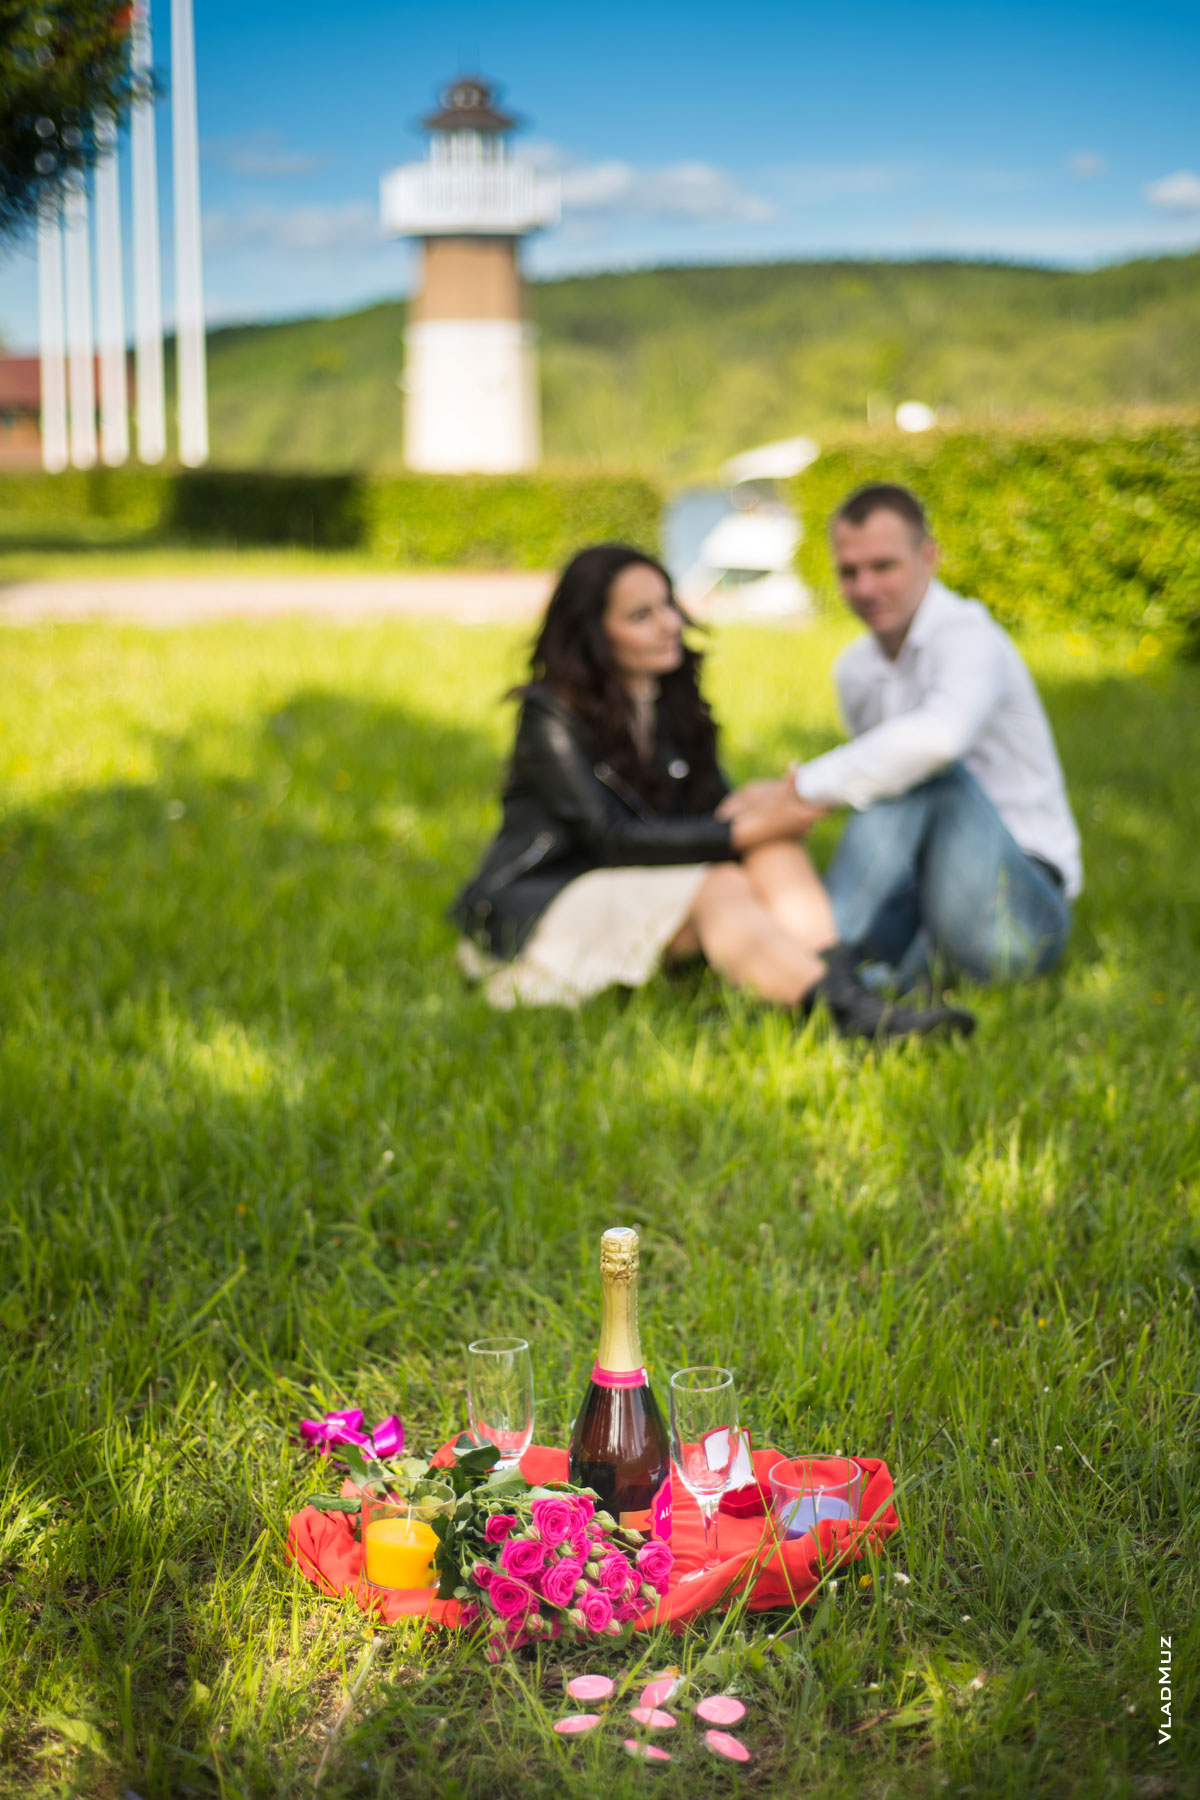 Фото мужчины с девушкой на лужайке на фоне маяка «Белого берега» (Раменский район, с. Верхнее Мячково)